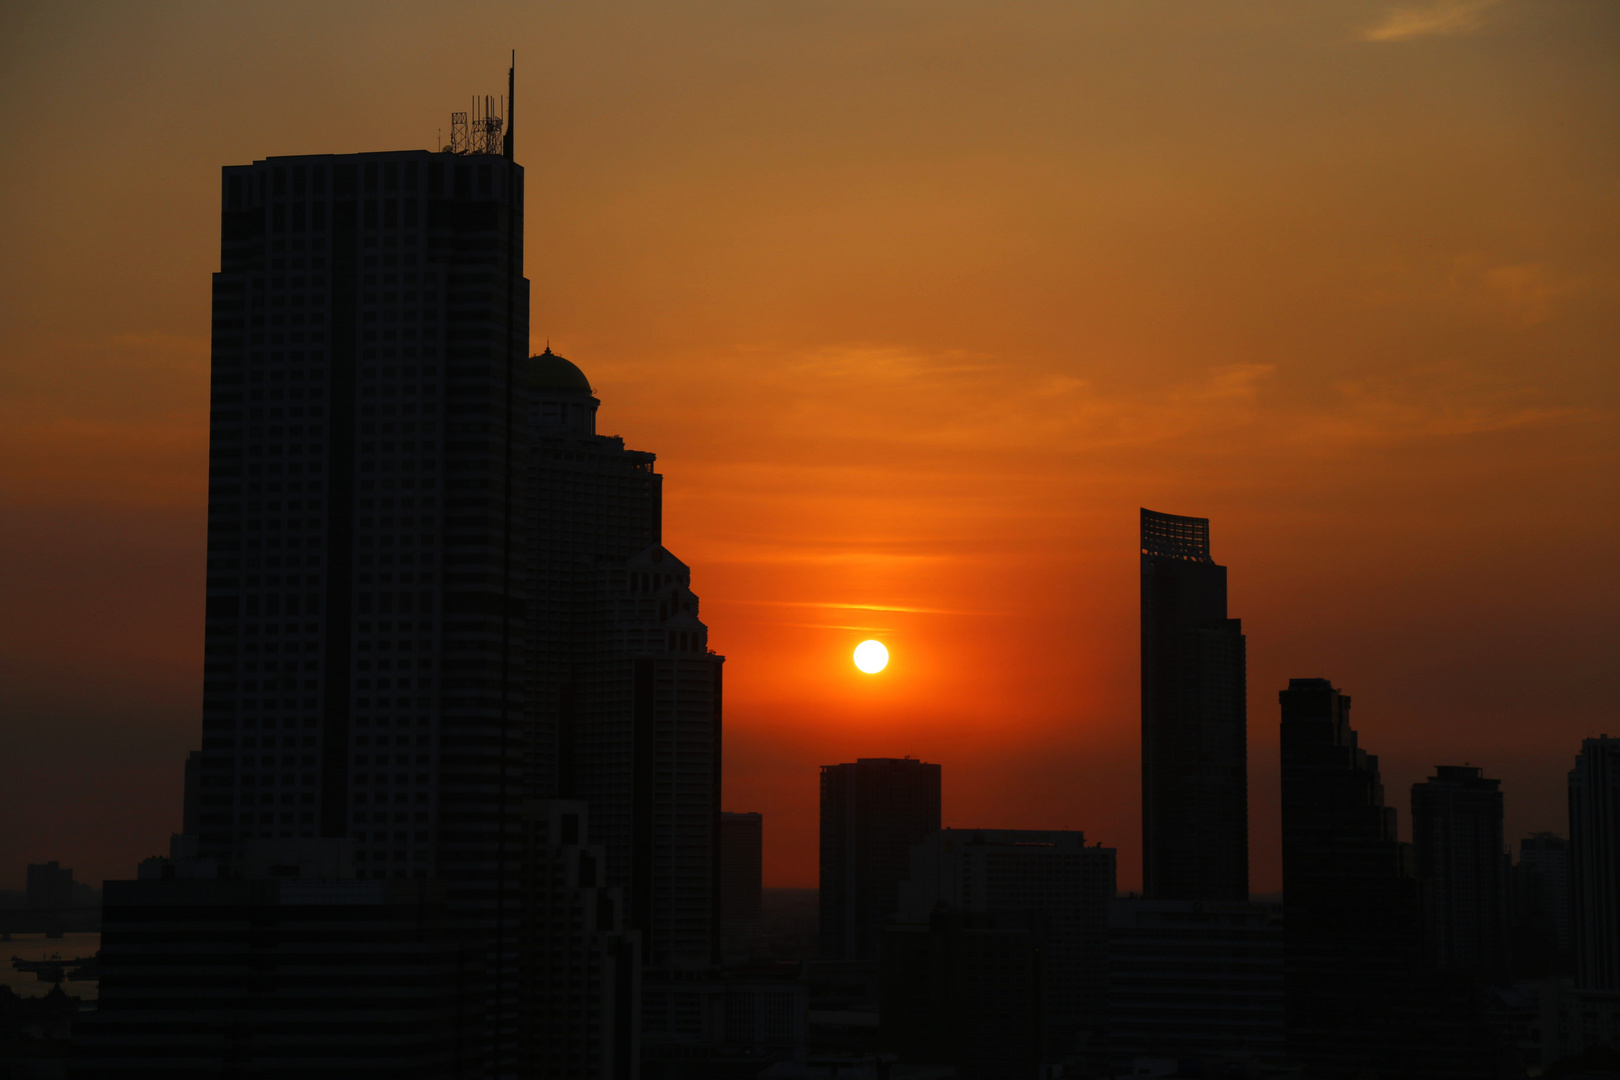 Sonneuntergang in Bangkok